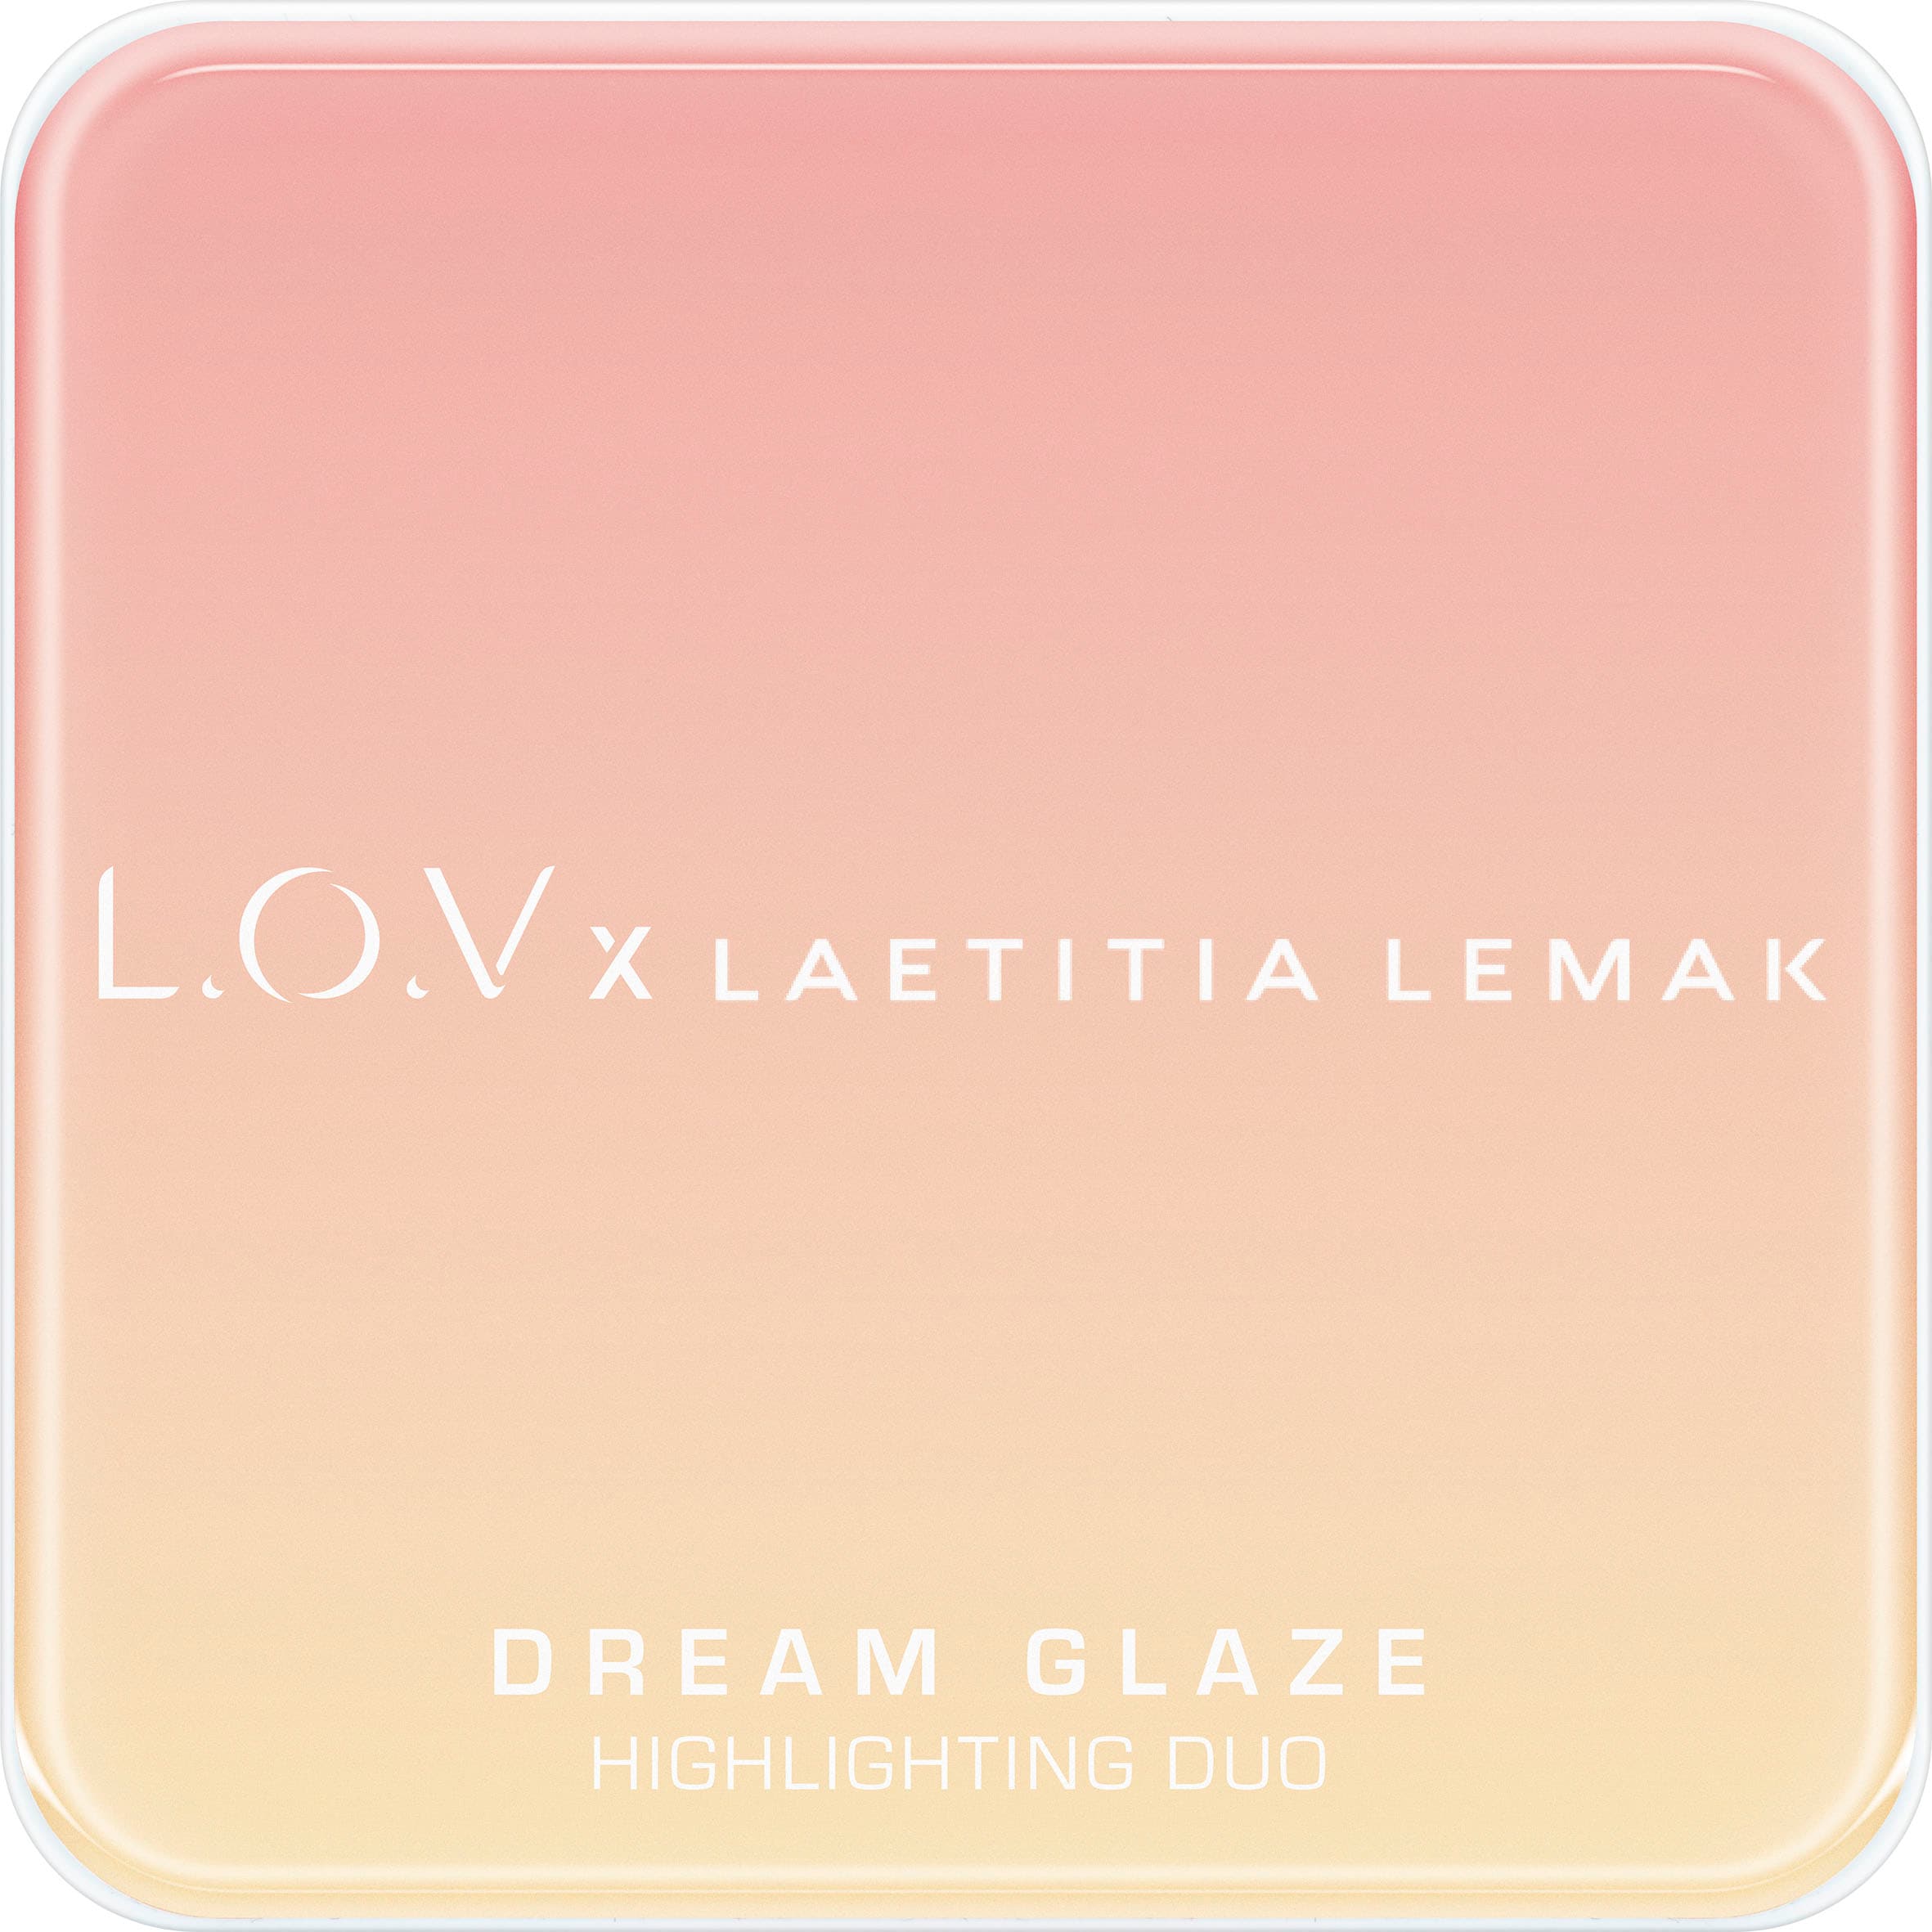 L.O.V Highlighter-Palette »L.O.V x LAETITIA GLAZE online LEMAK Duo« Highlighting kaufen DREAM